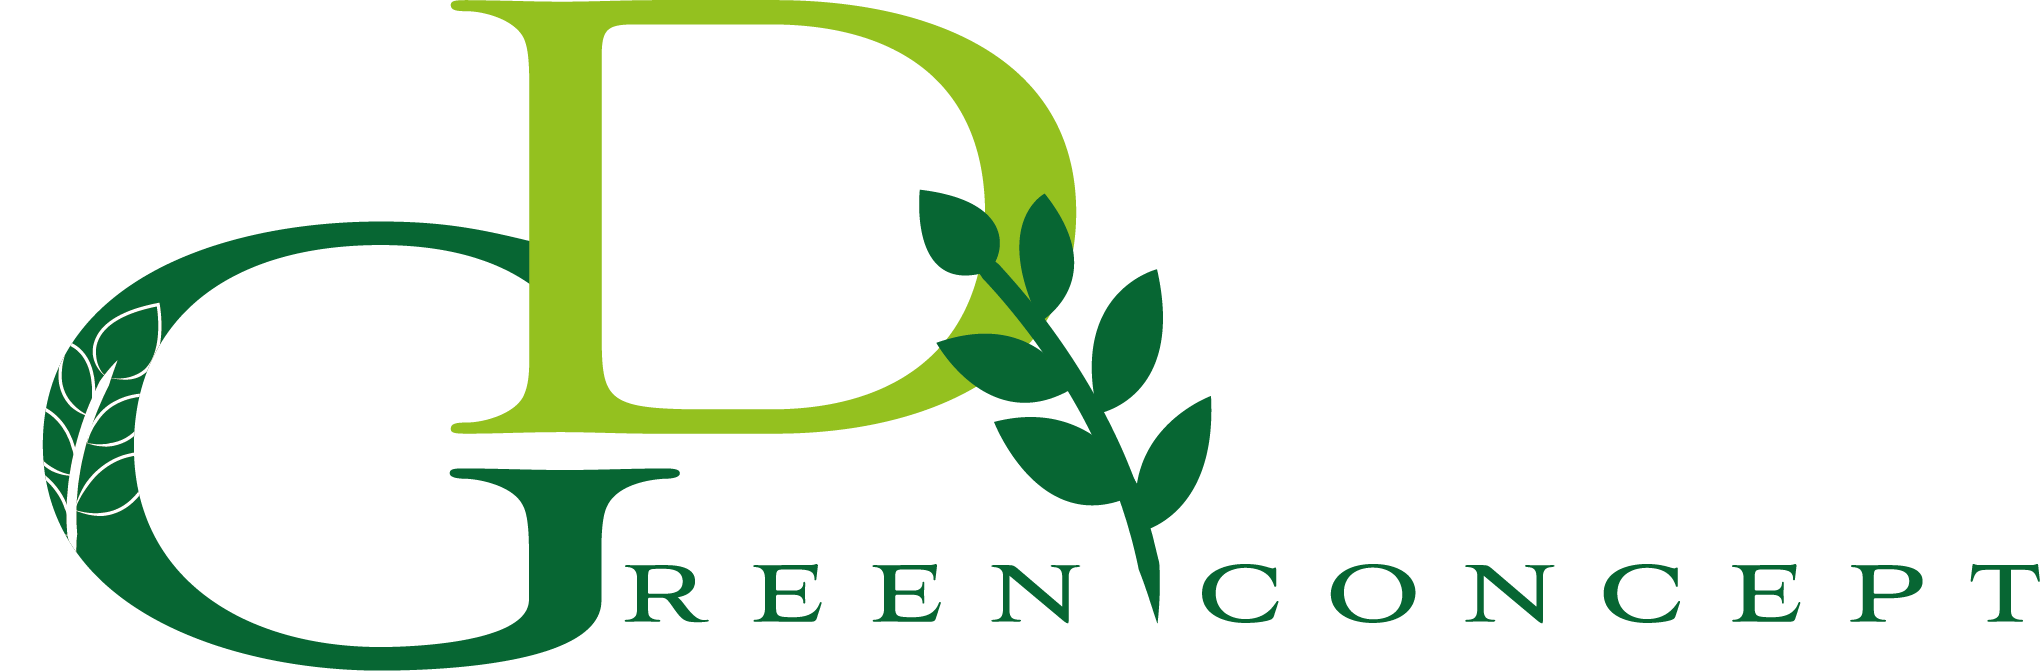 tuinmannen Breendonk GD Greenconcept